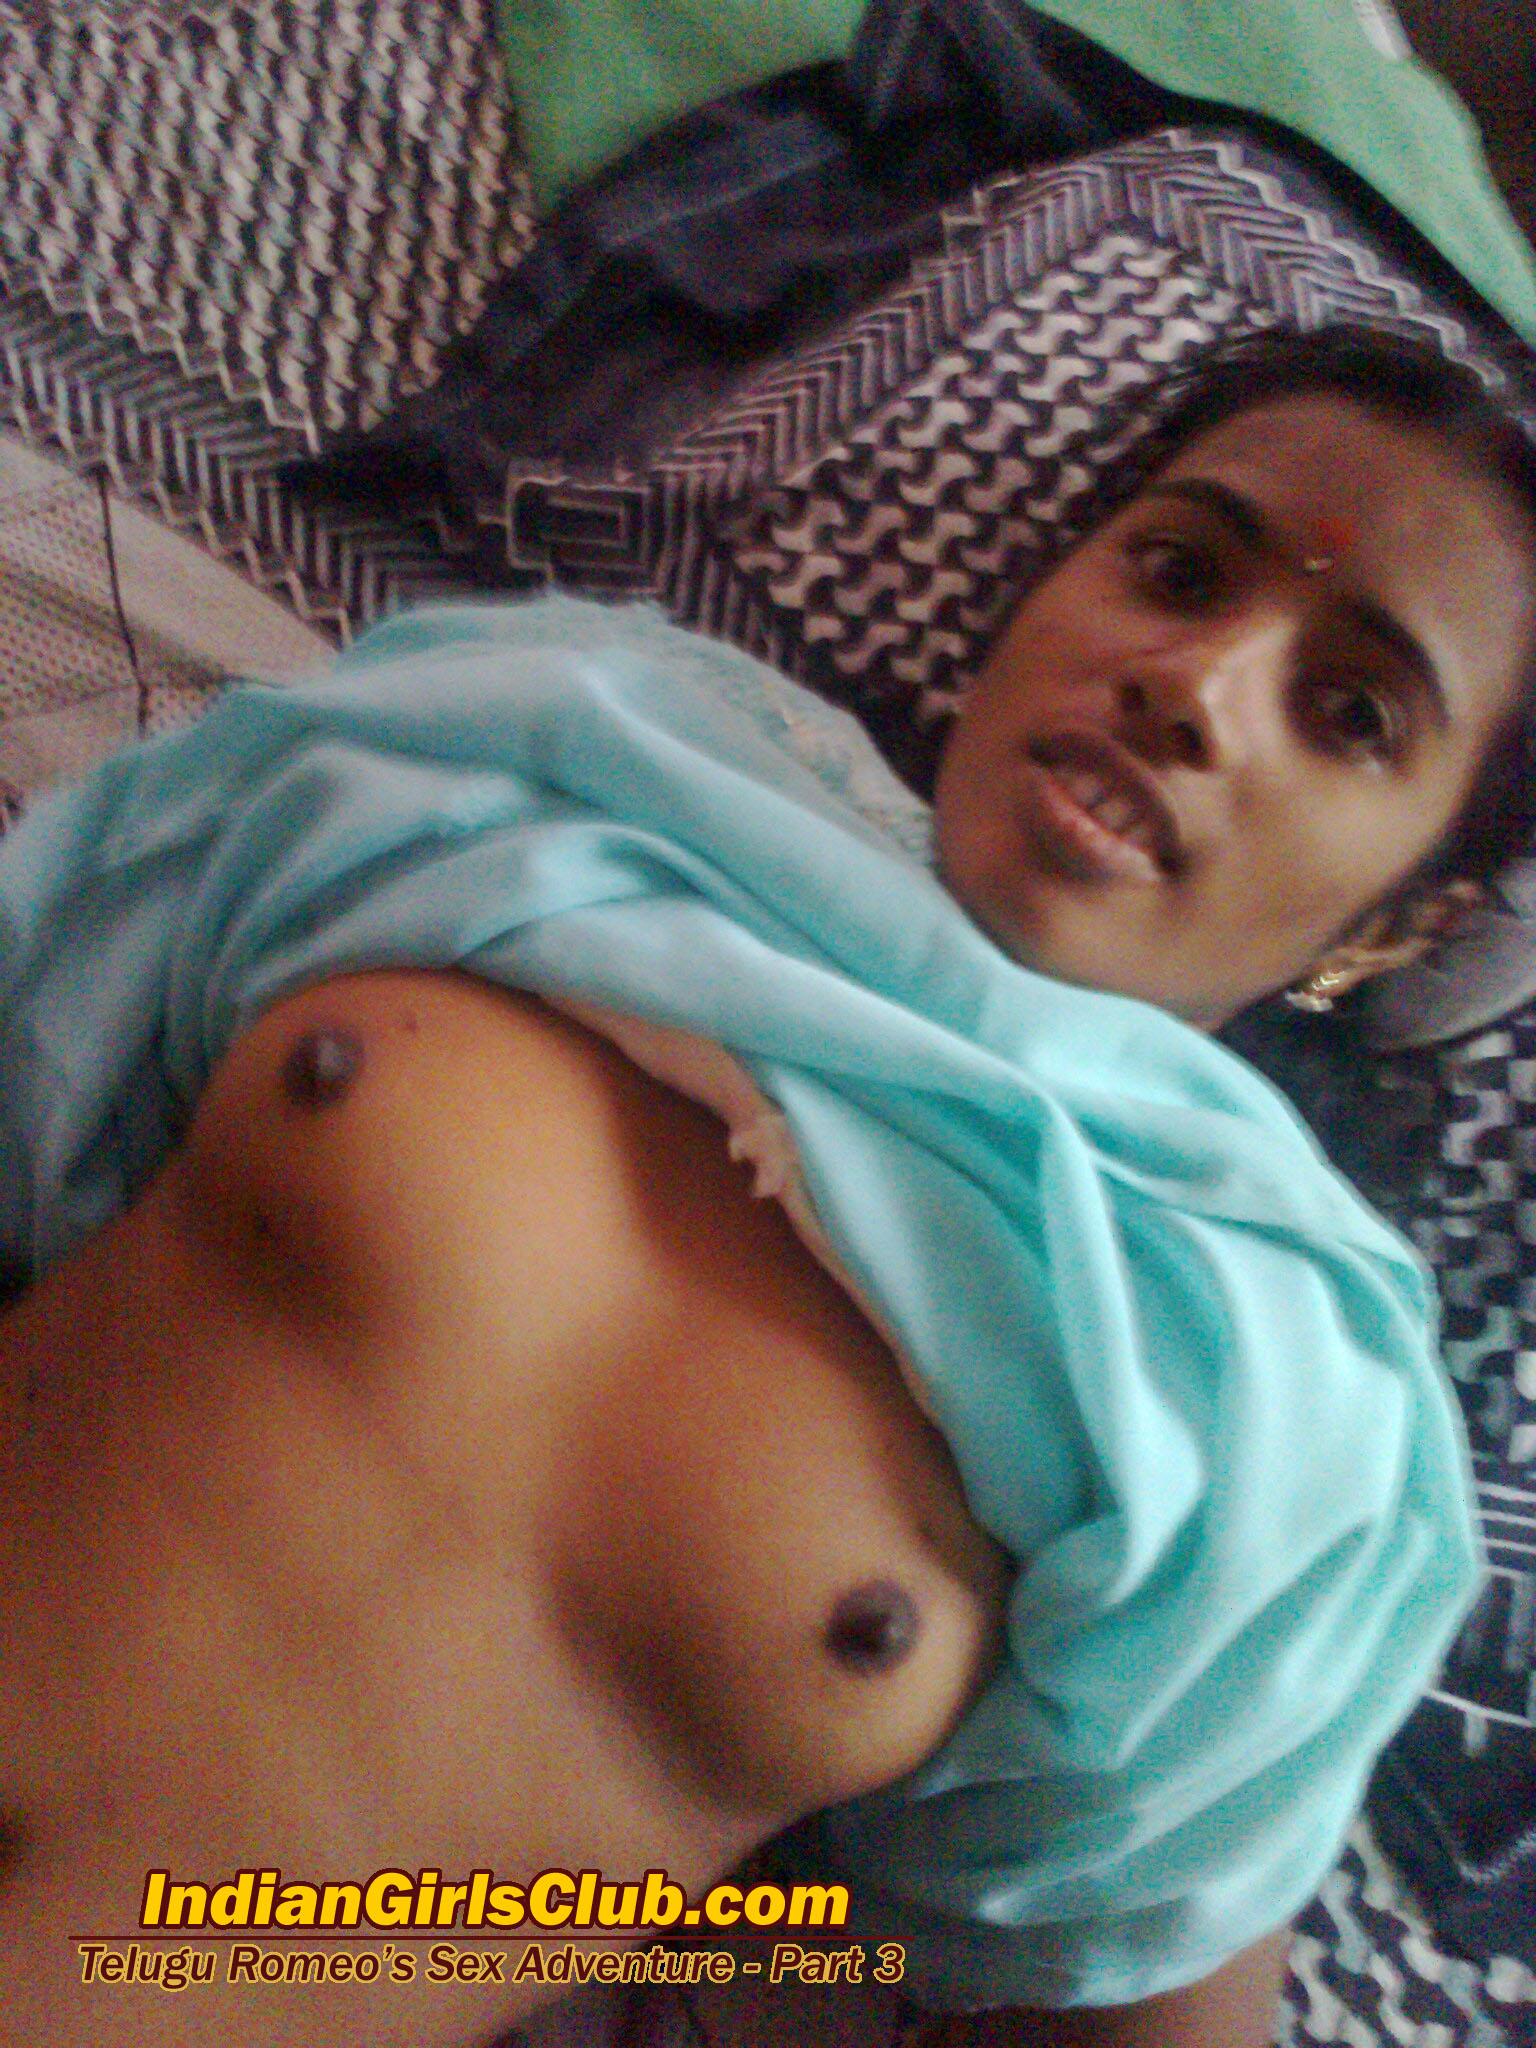 Indian Girls Club Sex - telugu romeo college girls sex 357 - Indian Girls Club - Nude Indian Girls  & Hot Sexy Indian Babes